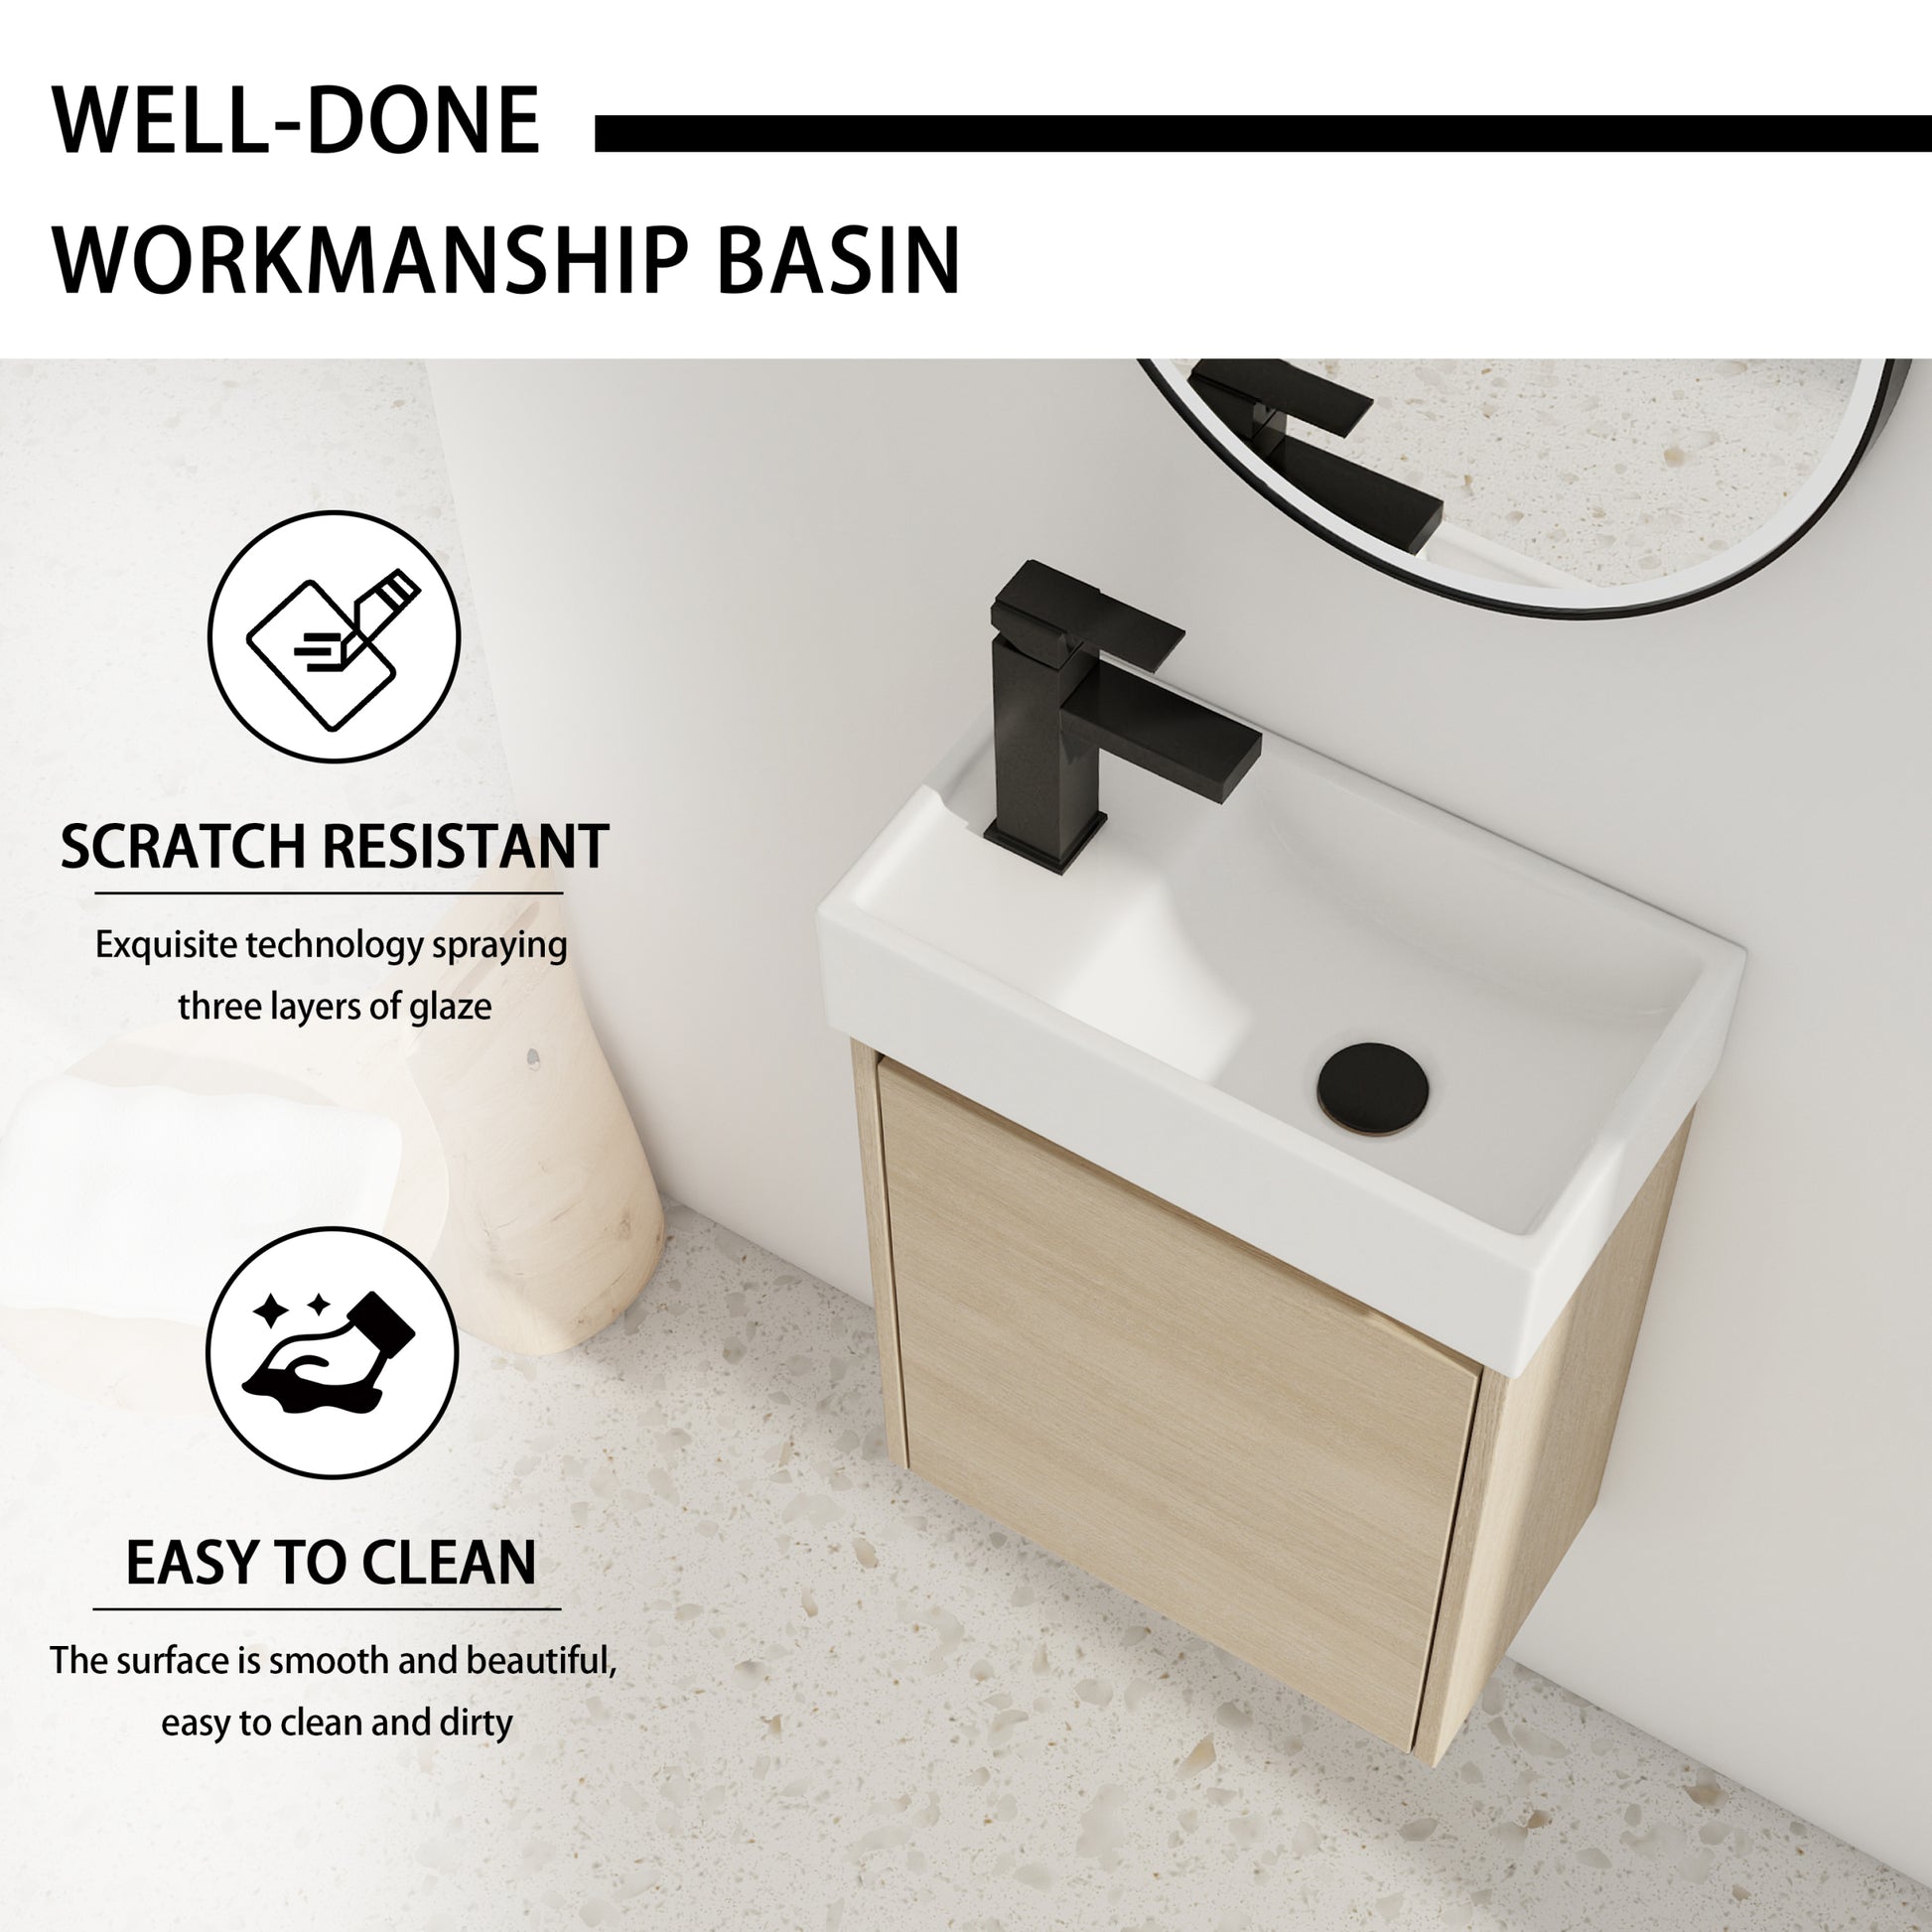 16 Inch Floating Bathroom Vanity With Single Sink,Soft plain light oak-plywood